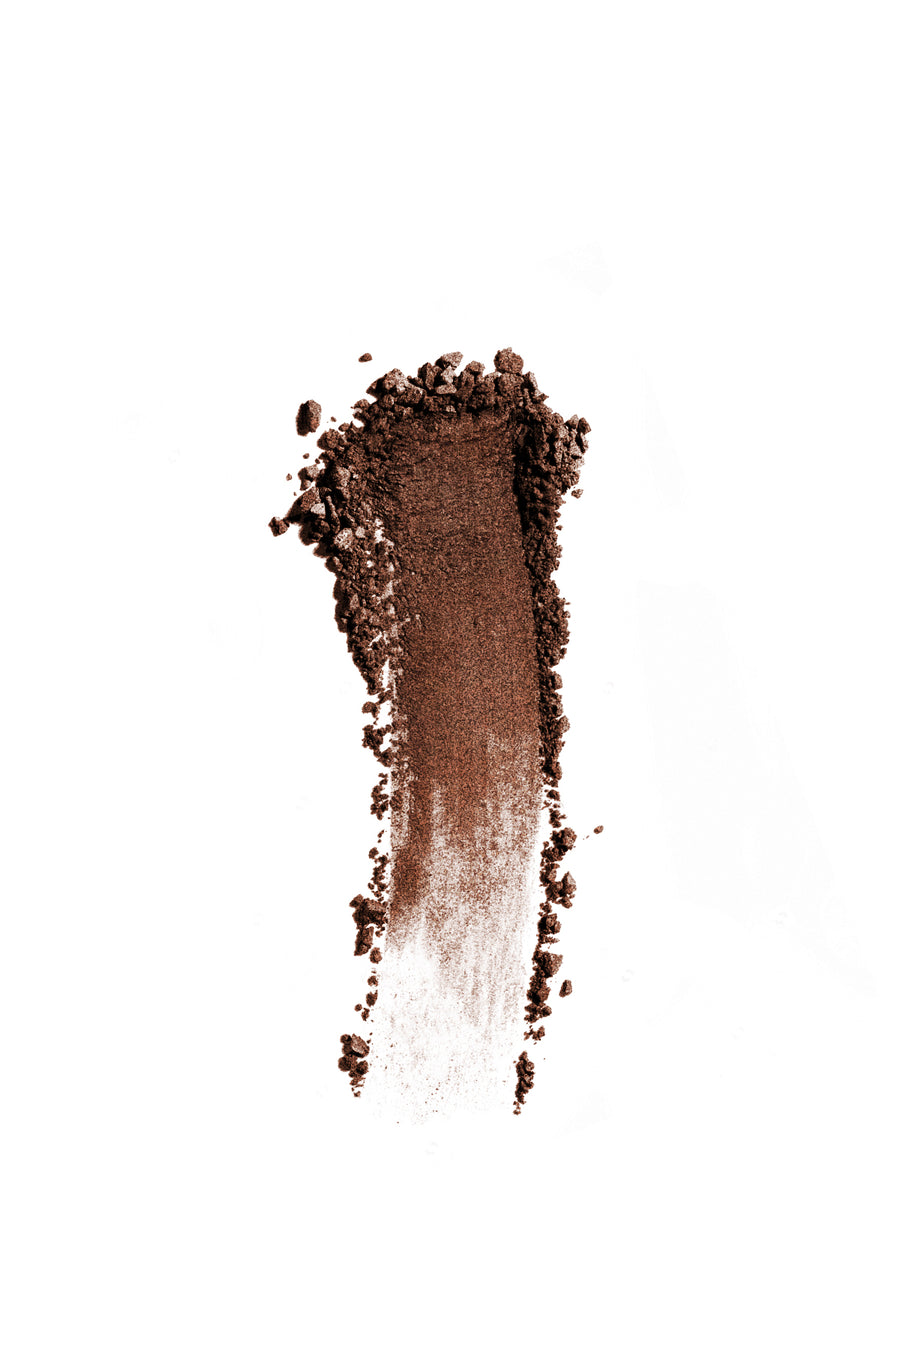 Shimmer Eyeshadow #3 - Deep Brown - Blend Mineral Cosmetics